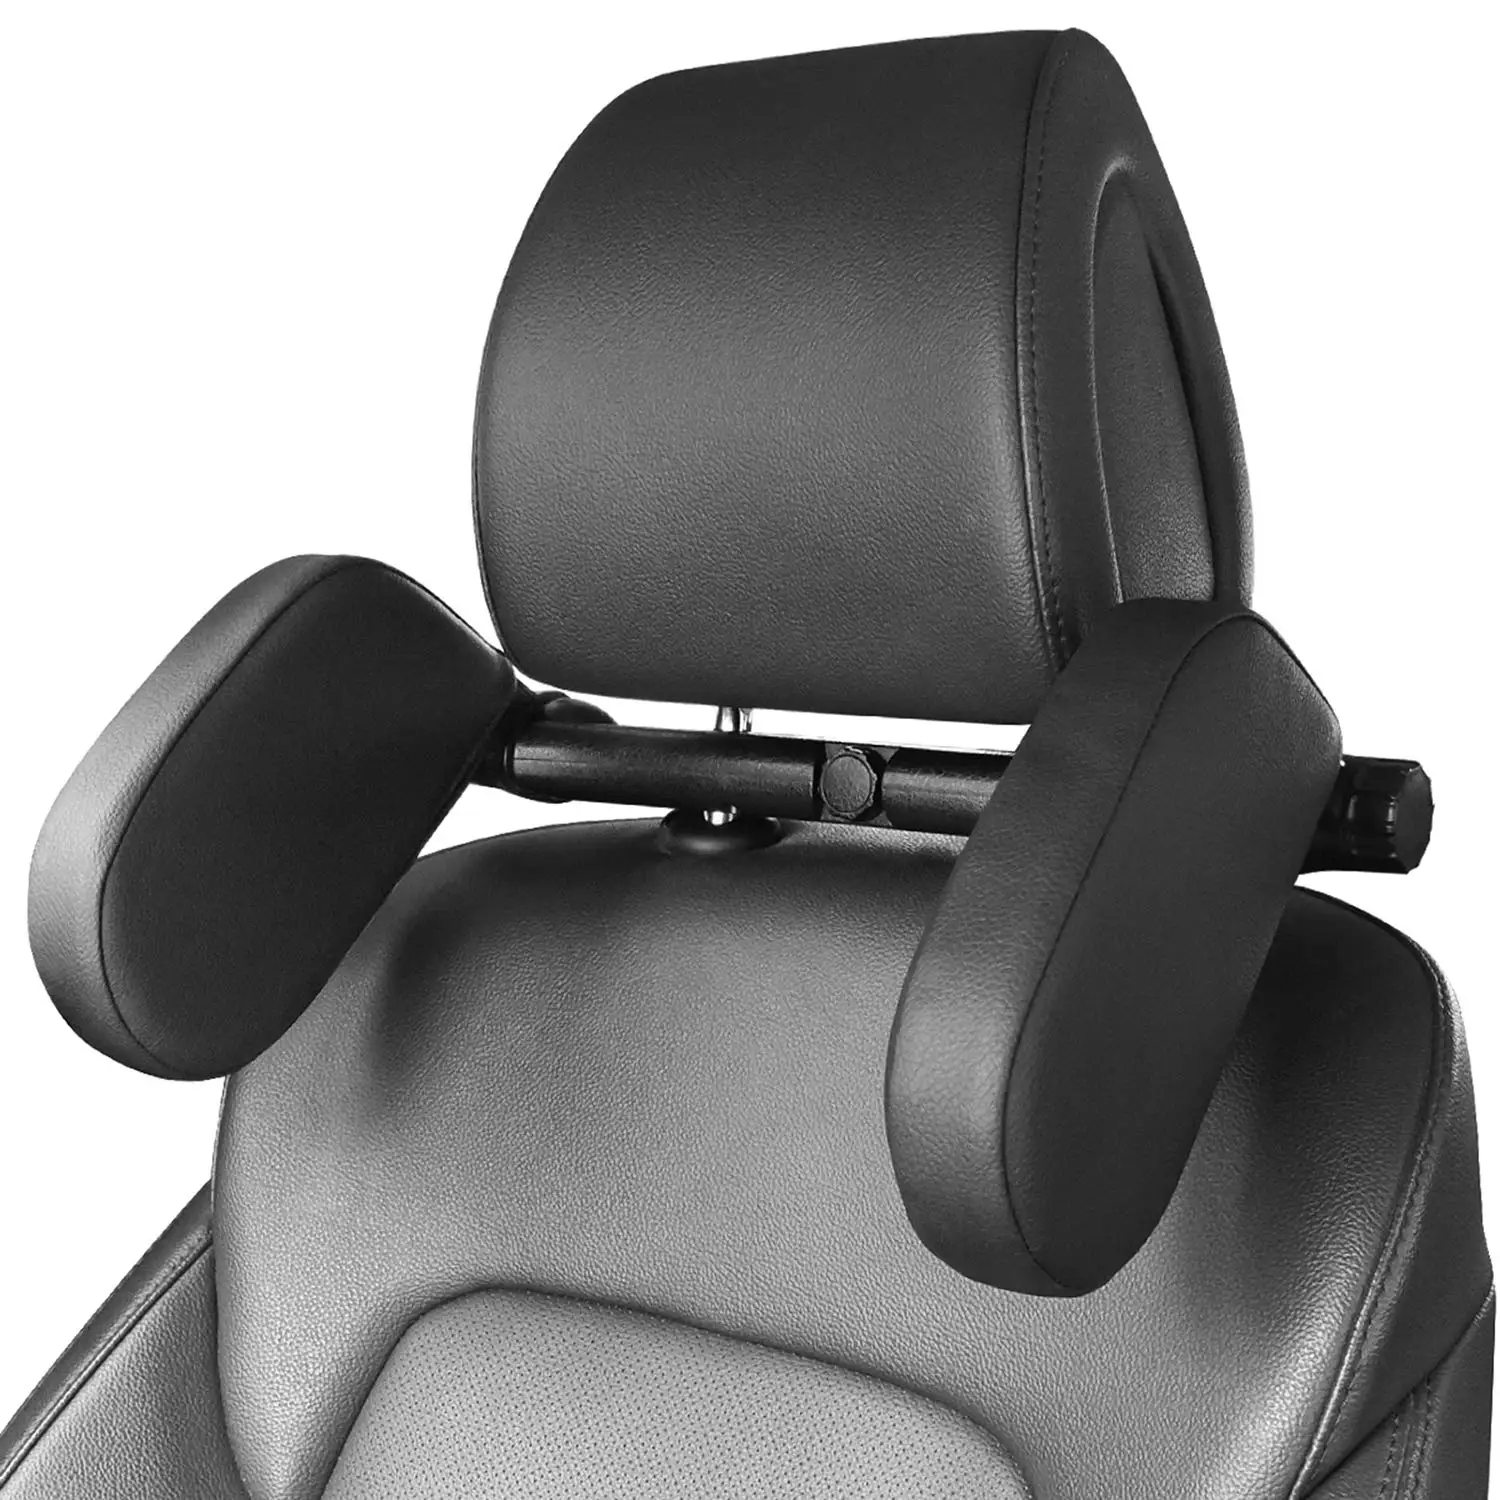 Black Car Headrest Pillow,Adjustable Road Pal Car Headrest,Sleep Travel Car Headrest,Car Seat Headrest Neck Rest Cushion for Adults 